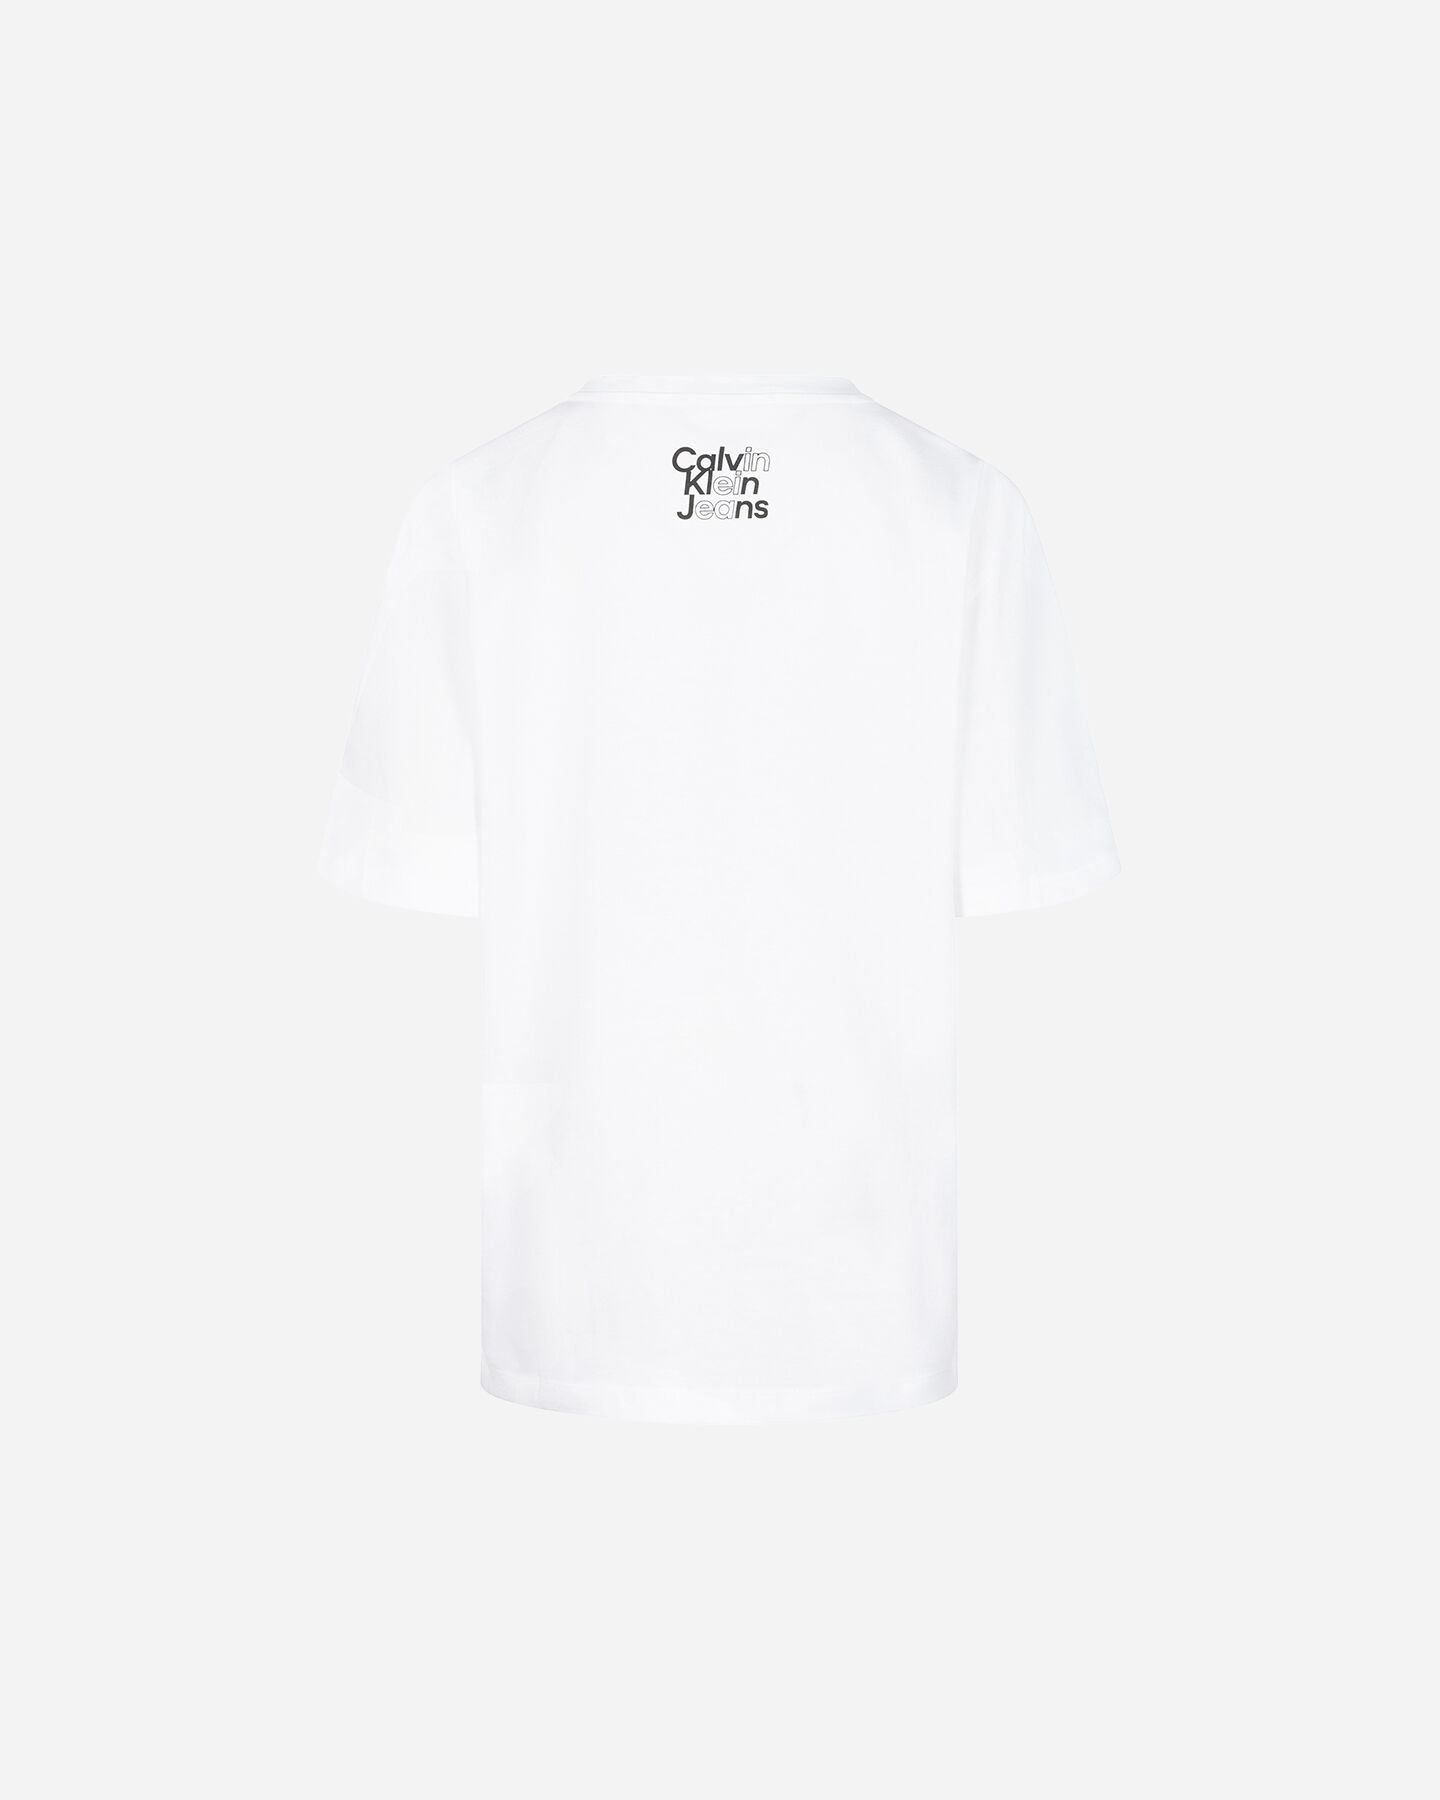  T-Shirt CALVIN KLEIN JEANS MAXI LOGO JR S4131531|BRIGHT WHI|10 scatto 1